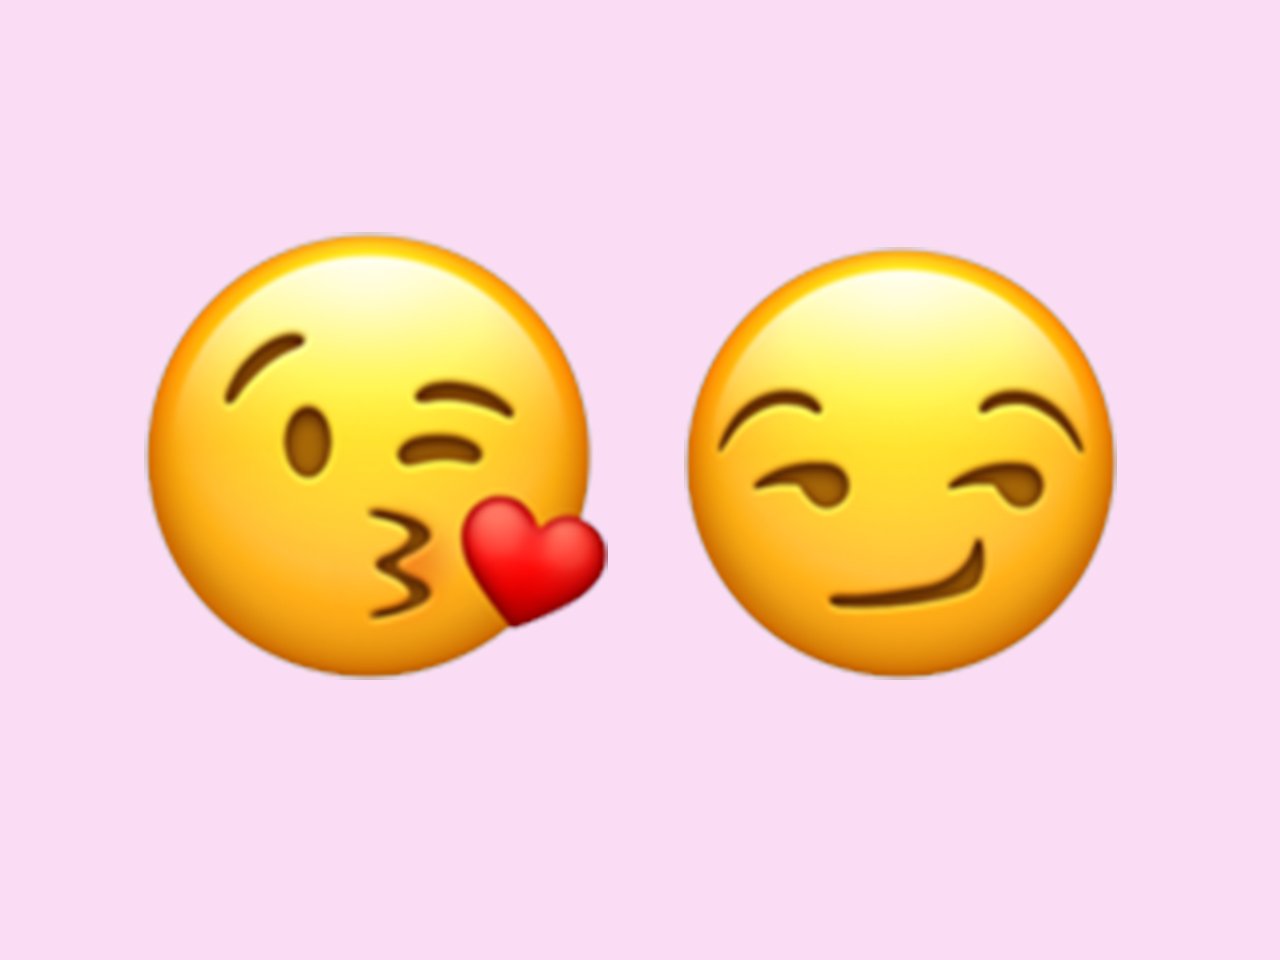 Adult Emoji Icons PRO - Romantic Texting & Flirty Emoticons Message Symbols  | App Price Drops